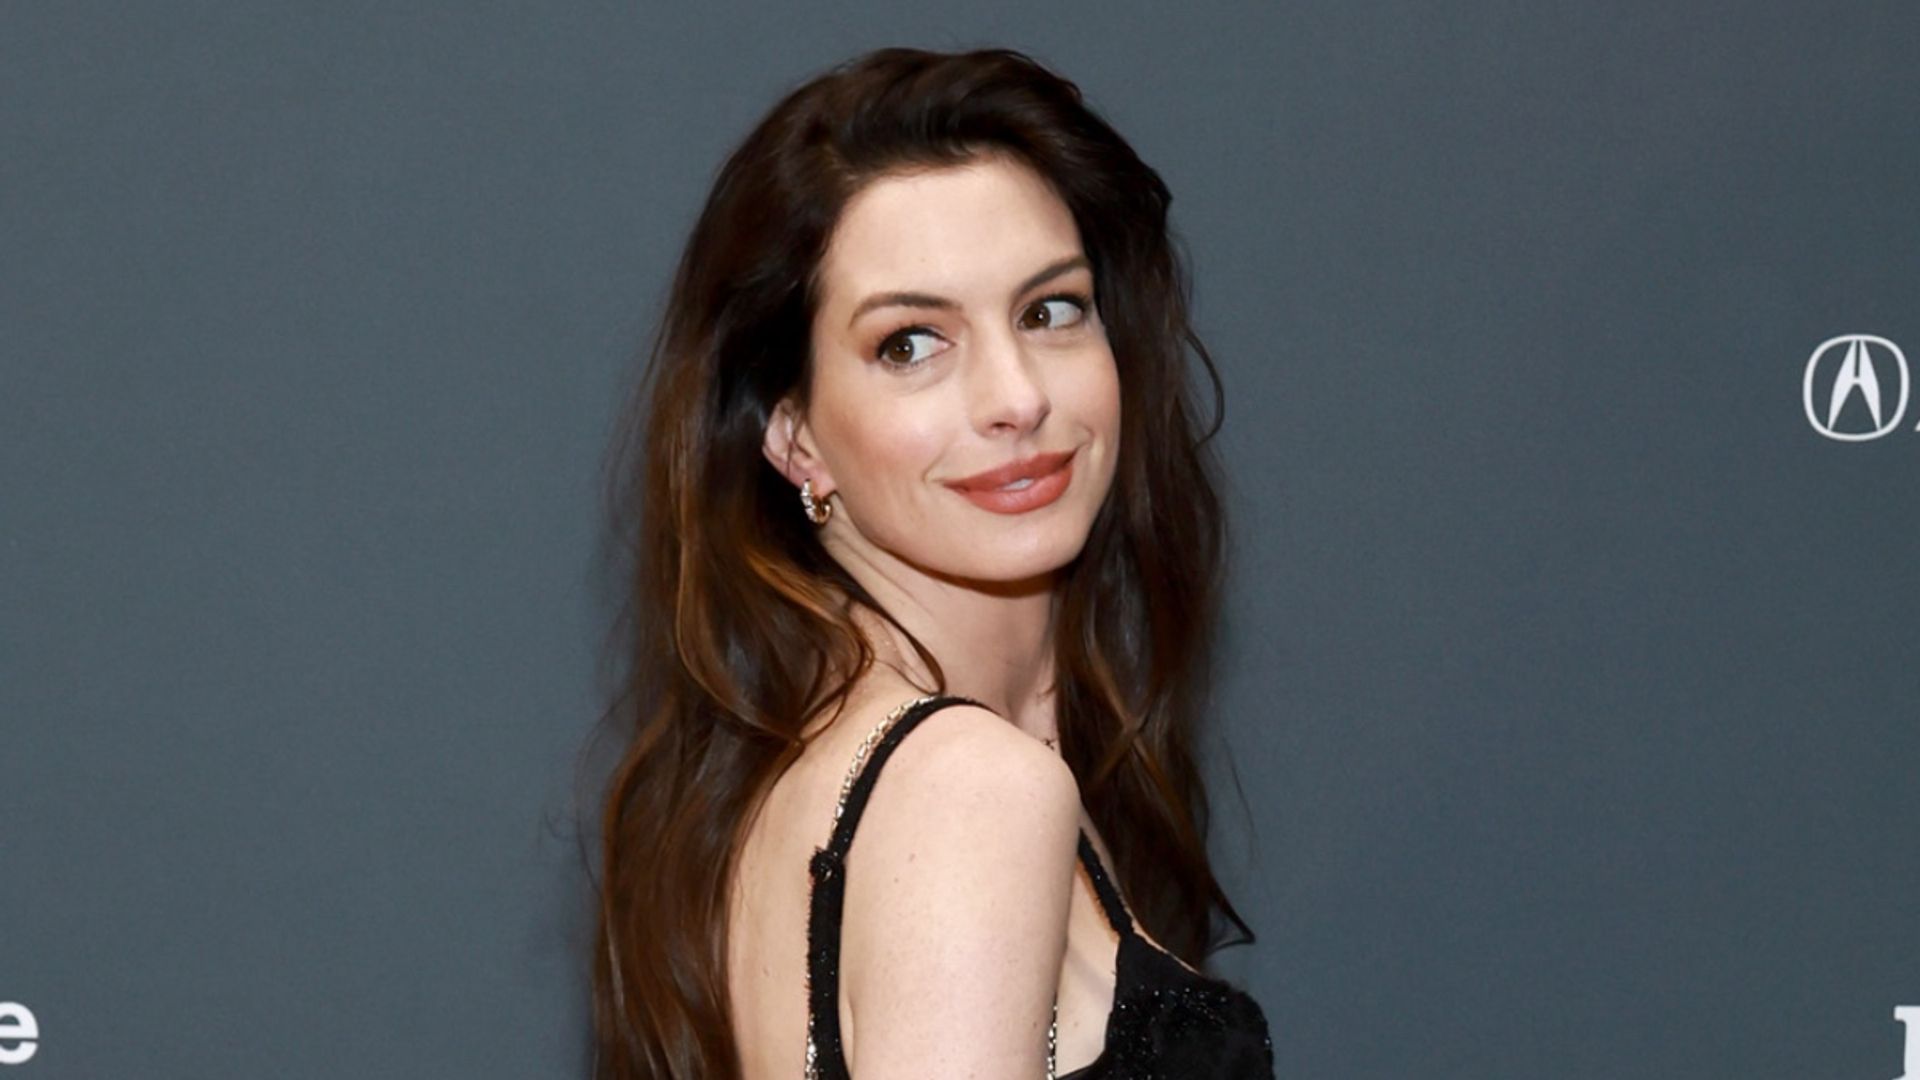 Anne Hathaway shares bare-faced selfie ahead of Sundance appearance